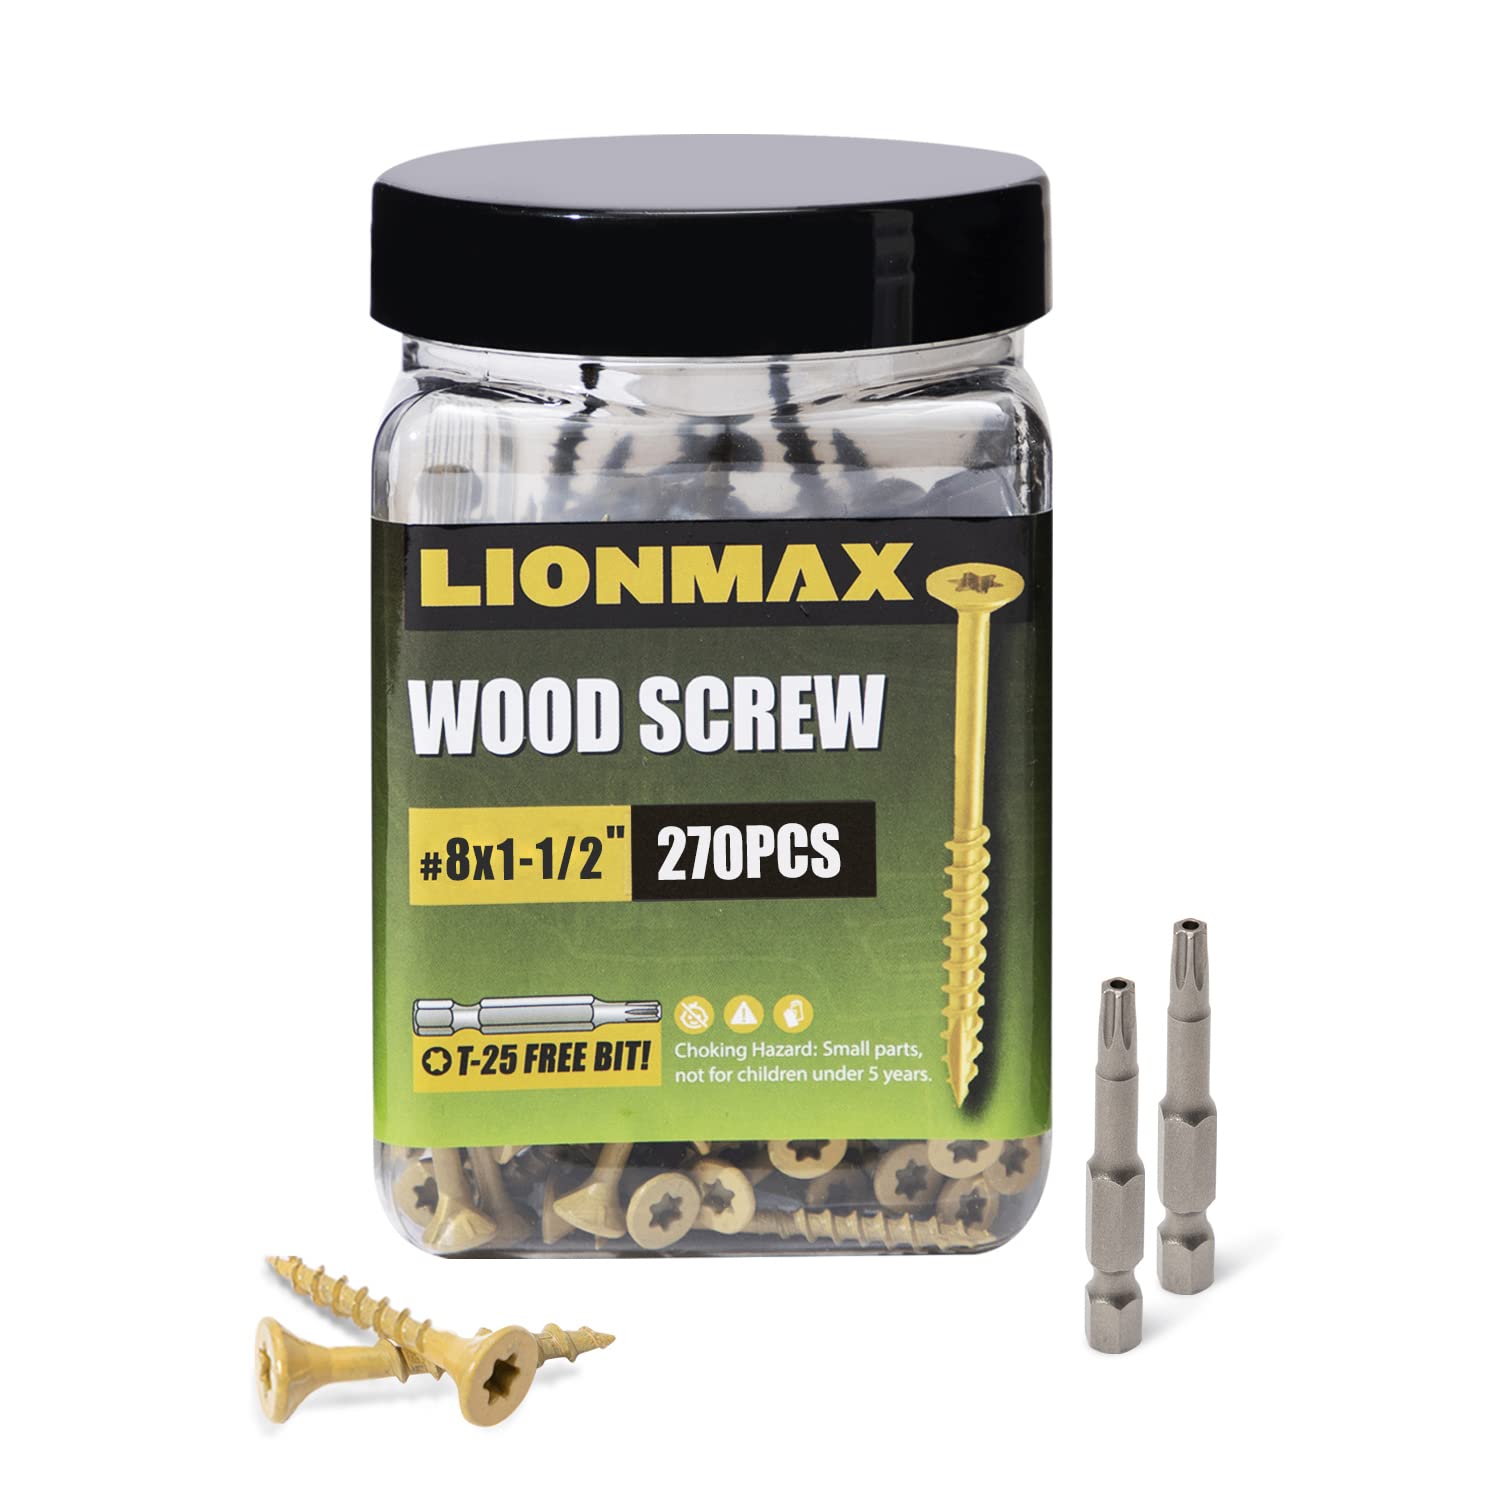 LIONMAX Exterior Wood Screws #8 x 1-1/2